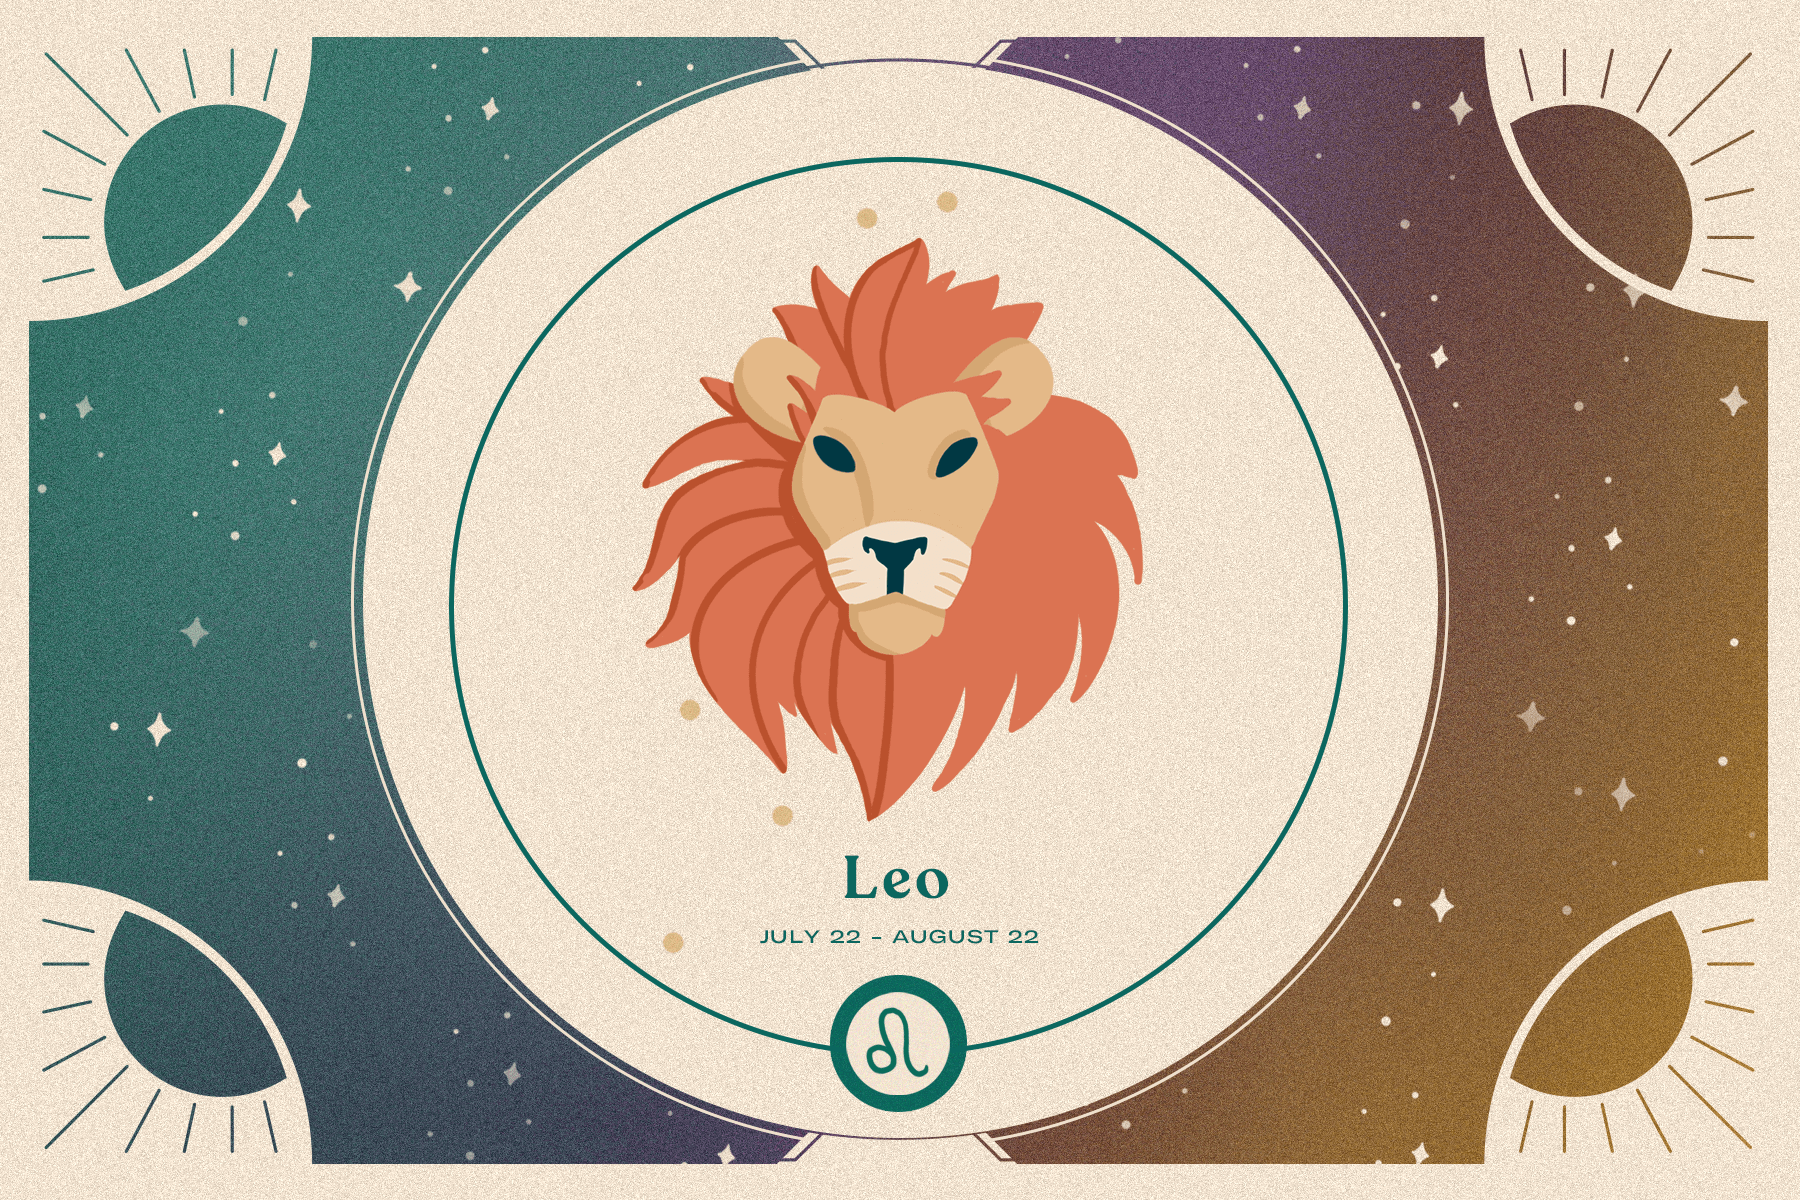 Leo Zodiac Sign symbol, date, and a lion